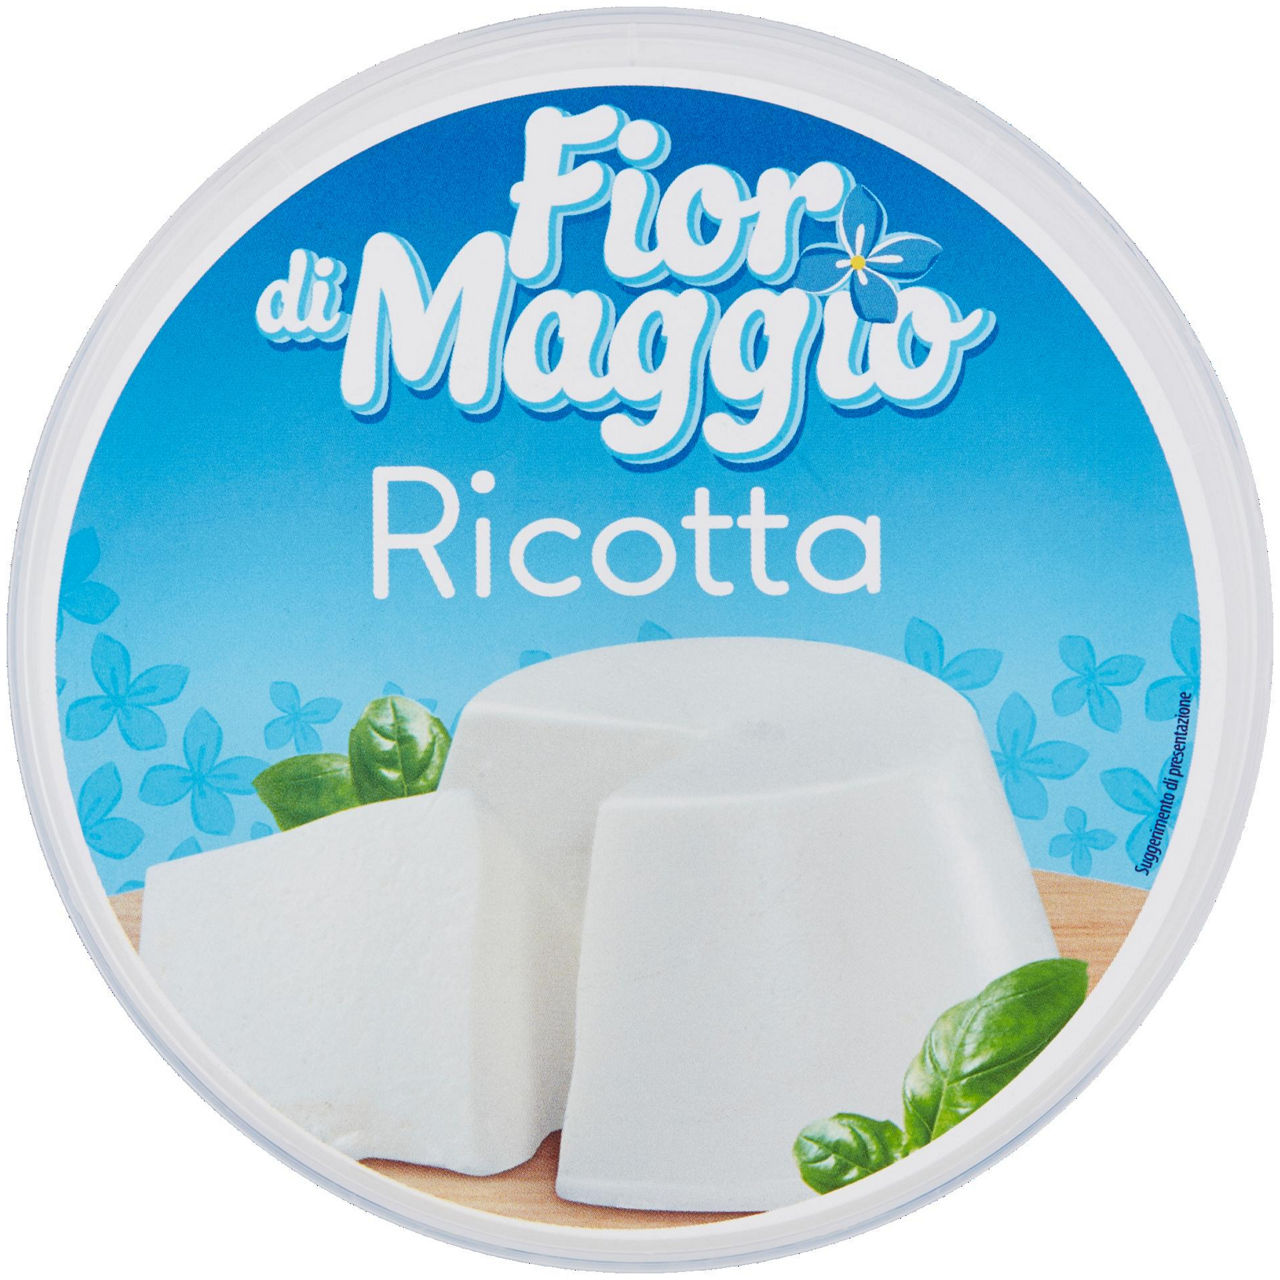 RICOTTA FIOR DI MAGGIO VASCHETTA G 250 - 0